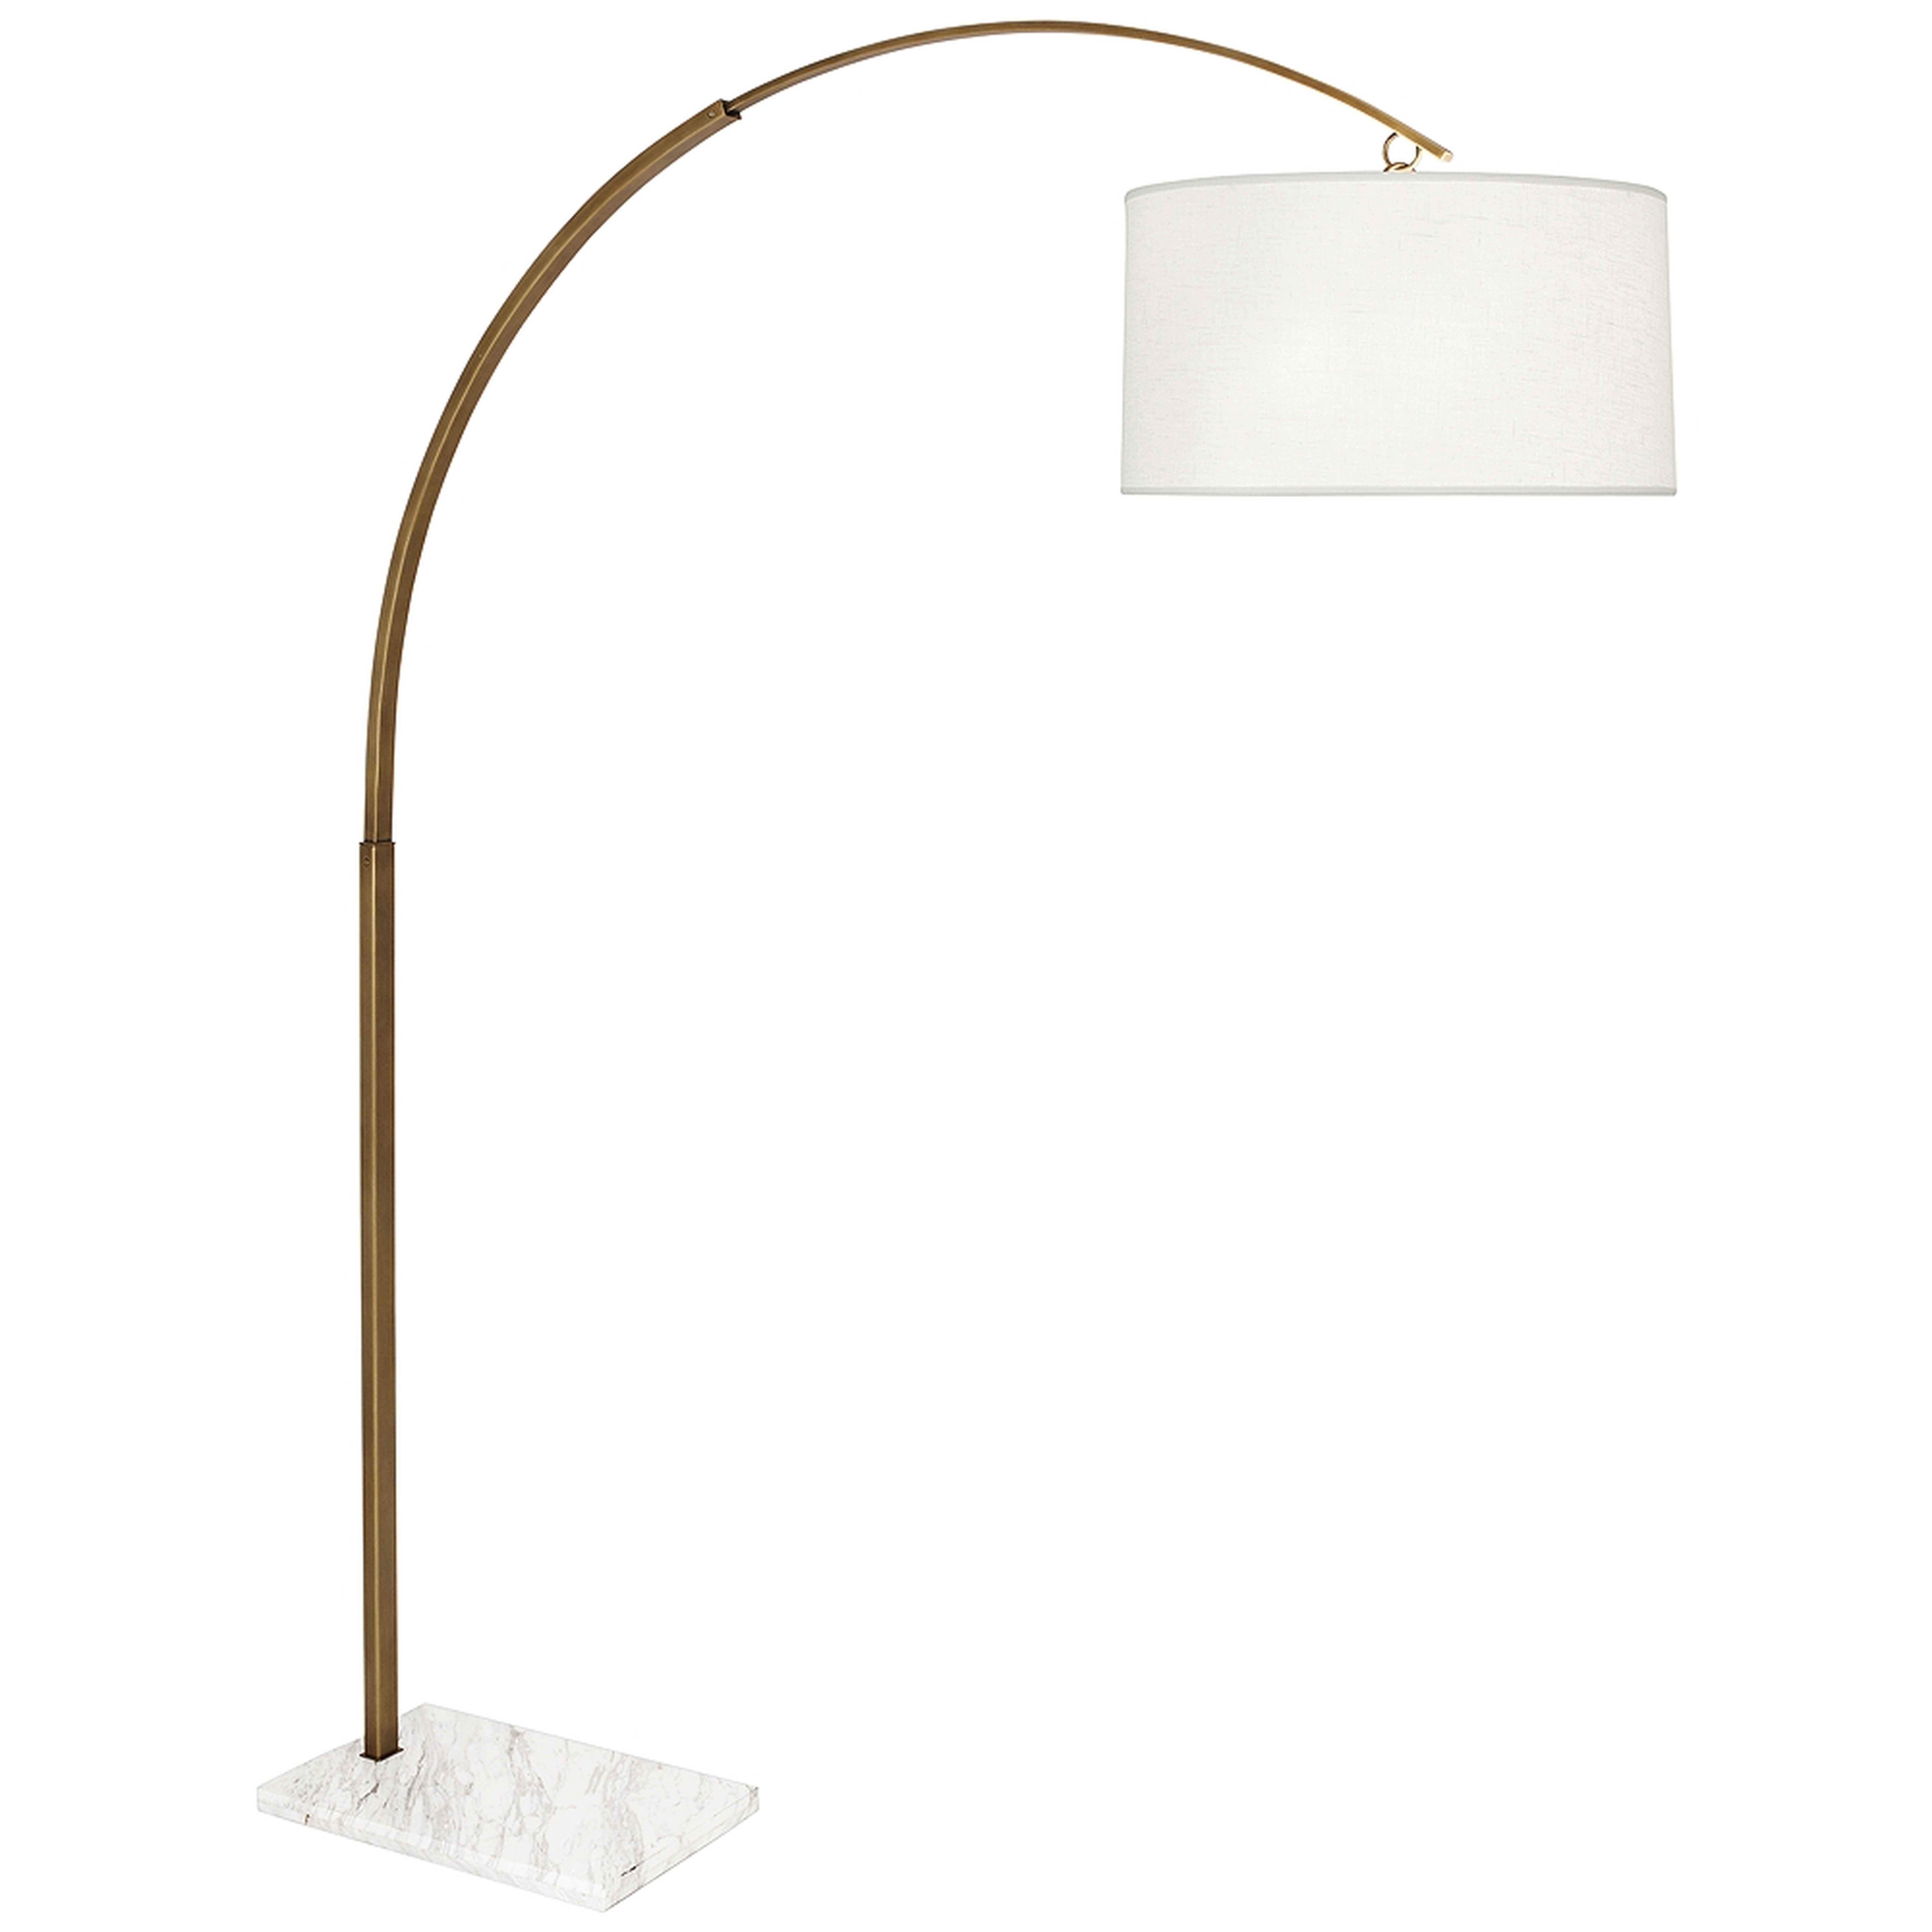 Robert Abbey Archer Large Warm Brass Arc Floor Lamp - Style # 41C73 - Lamps Plus